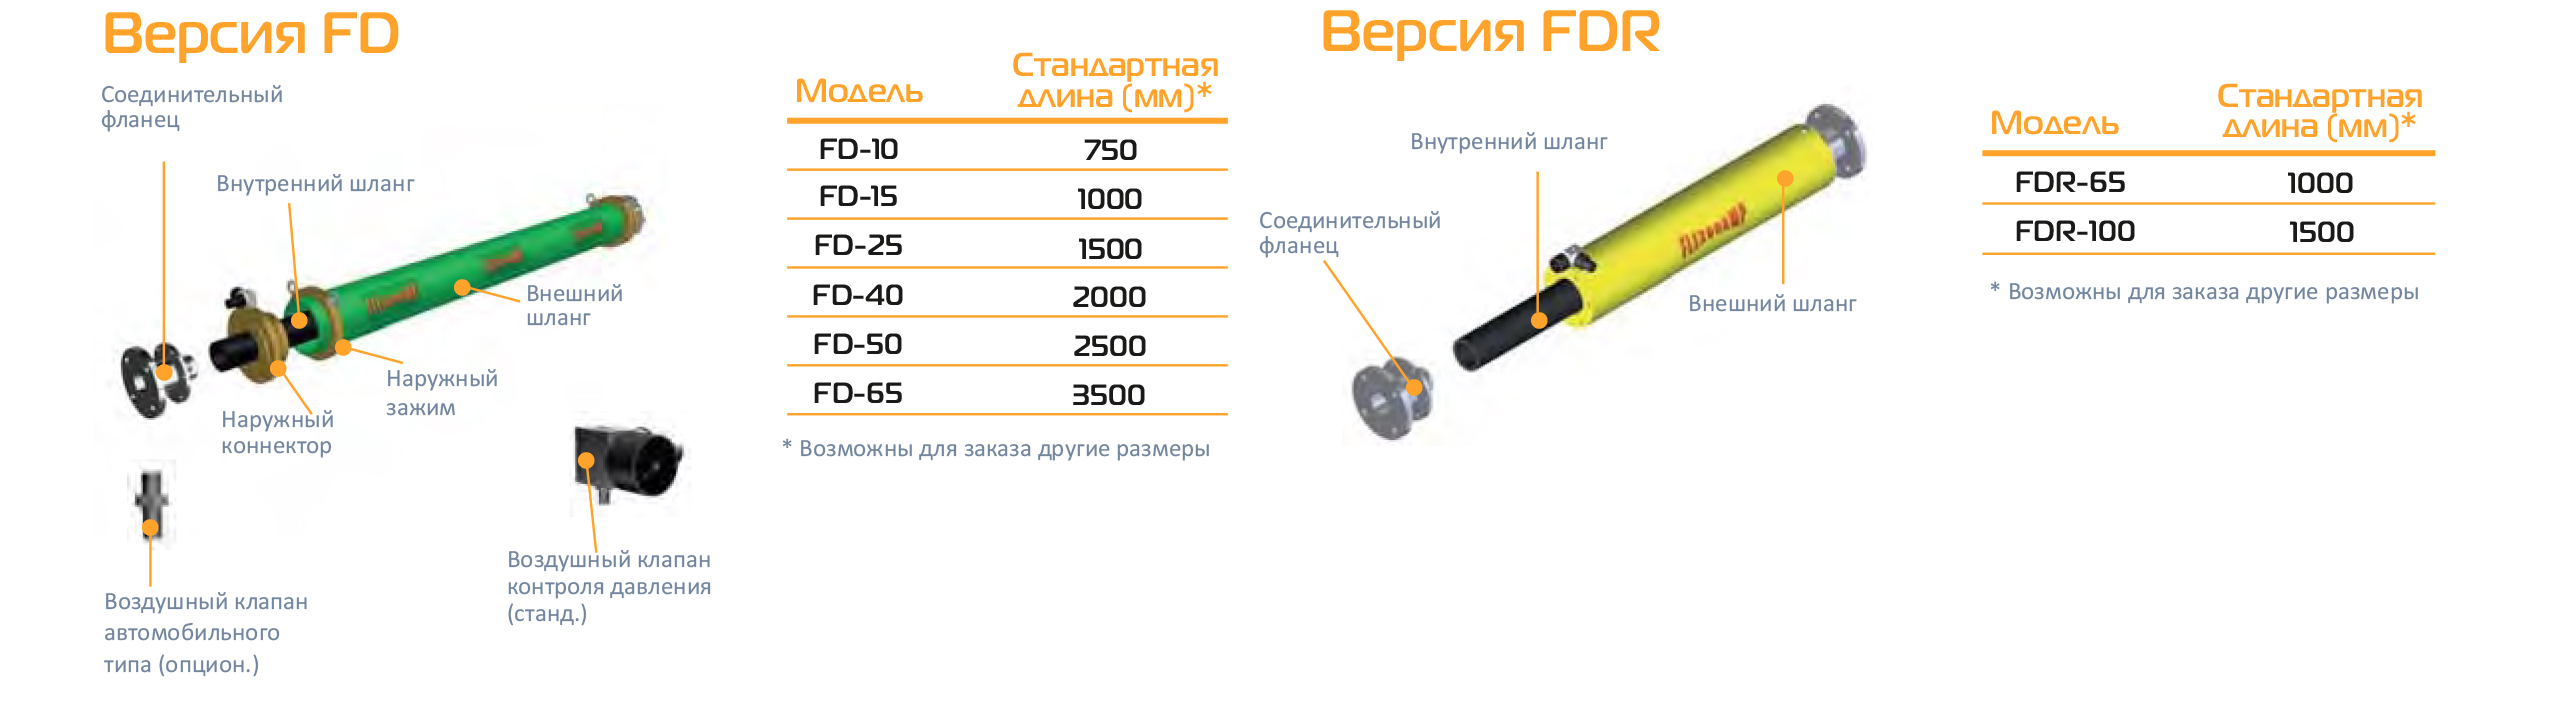 Pulsation dampers Flexodamp rus